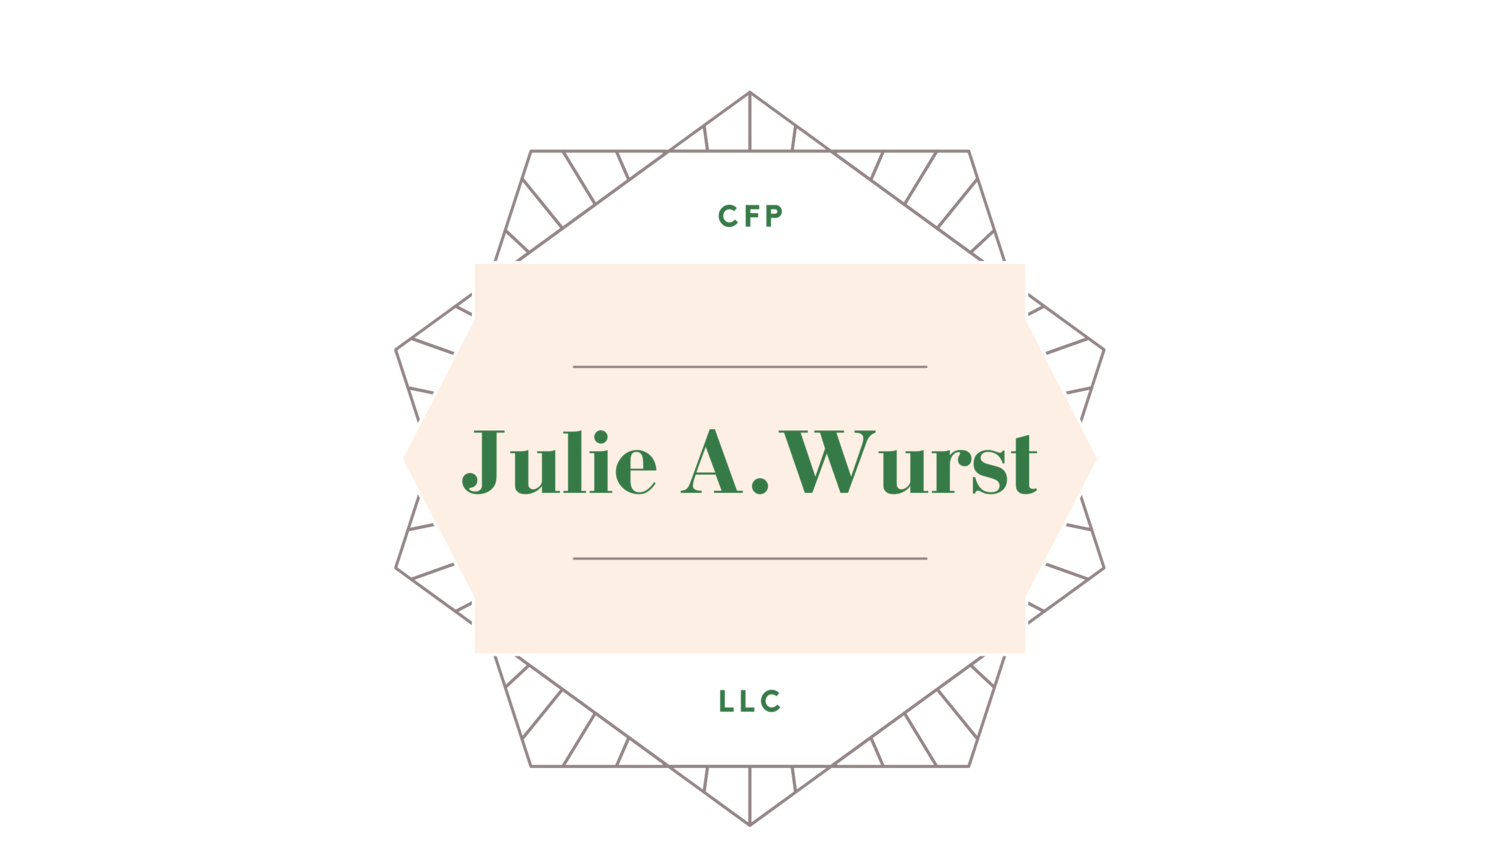 Julie A. Wurst